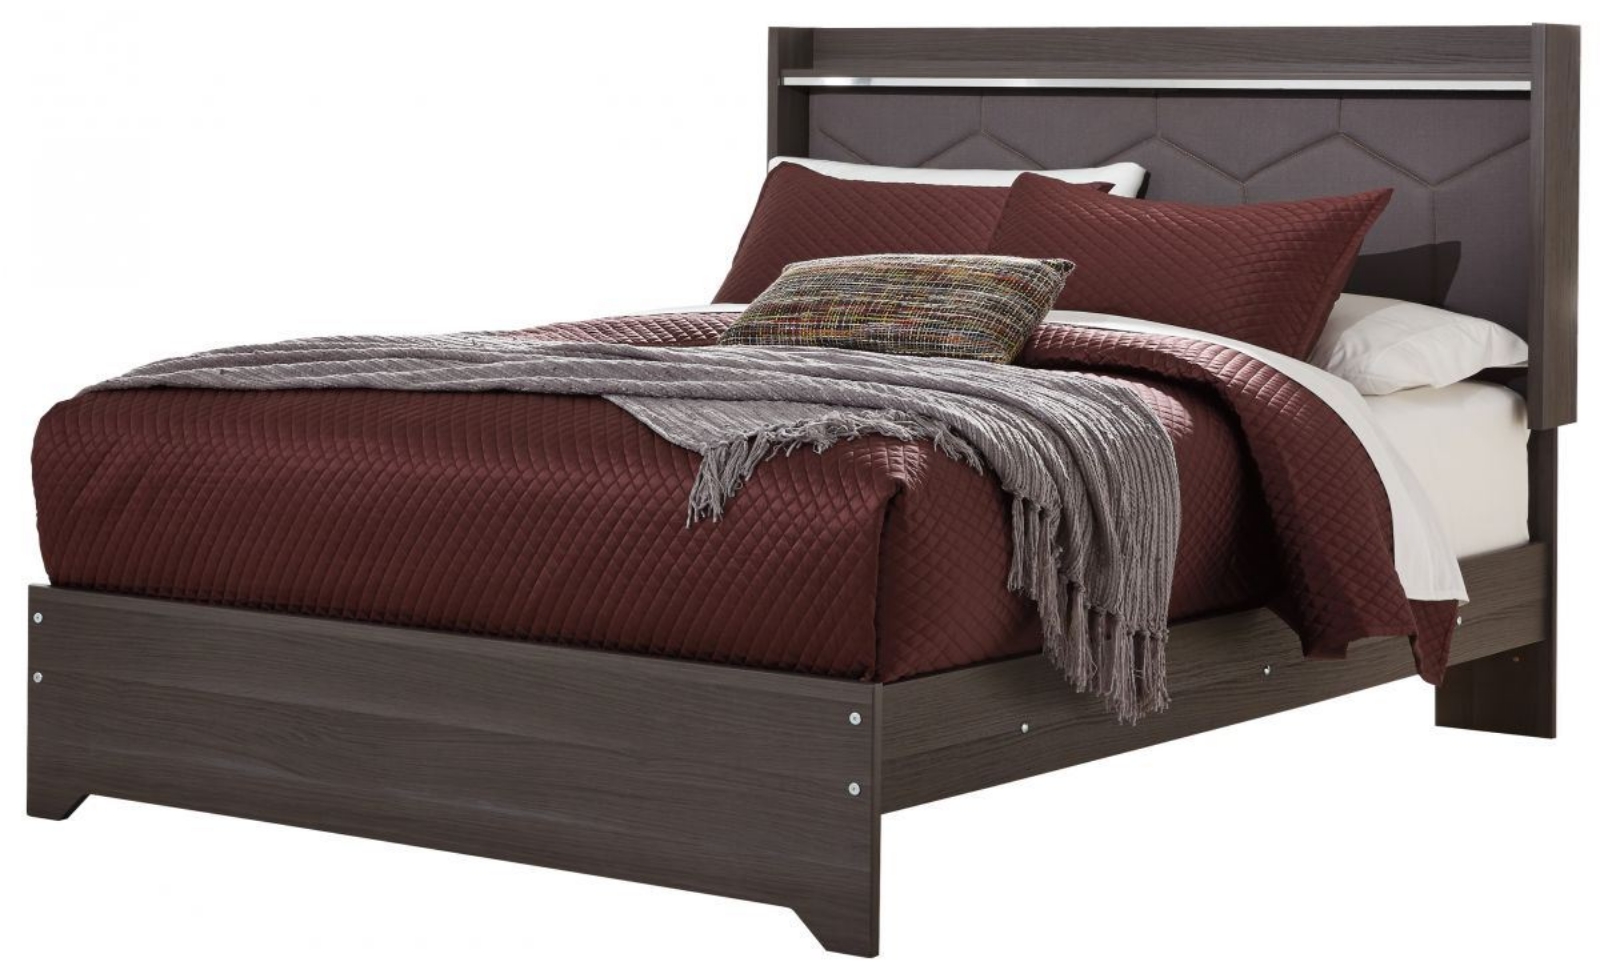 Picture of Annikus Queen Size Bed